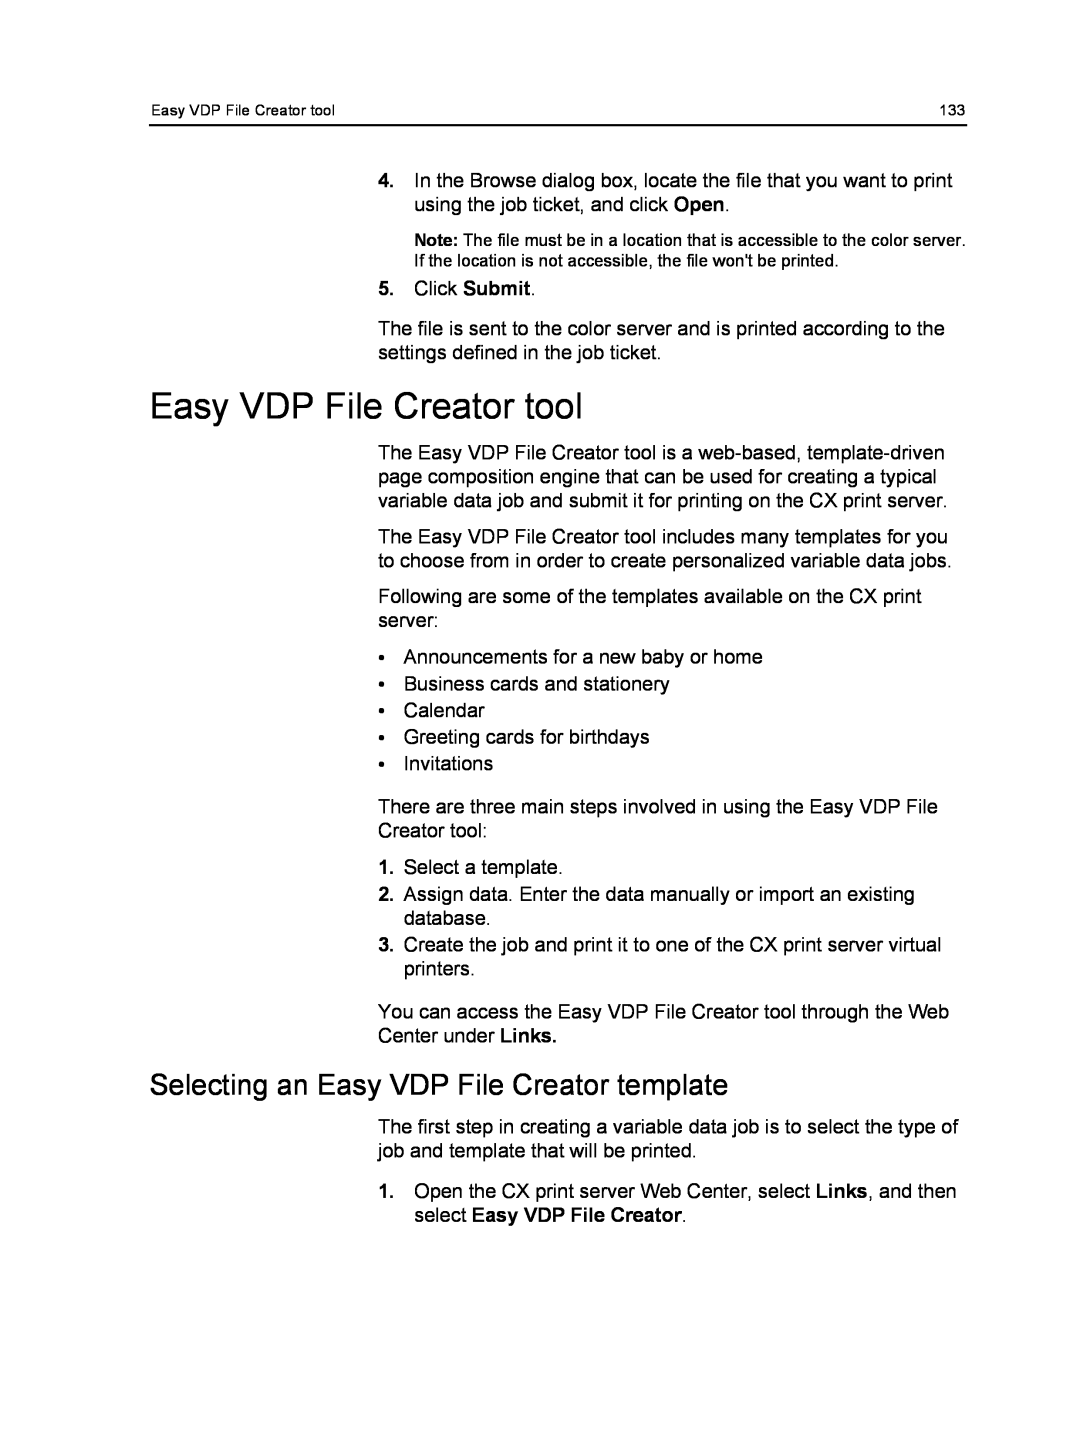 Xerox 550, 560 manual Easy VDP File Creator tool, Selecting an Easy VDP File Creator template 